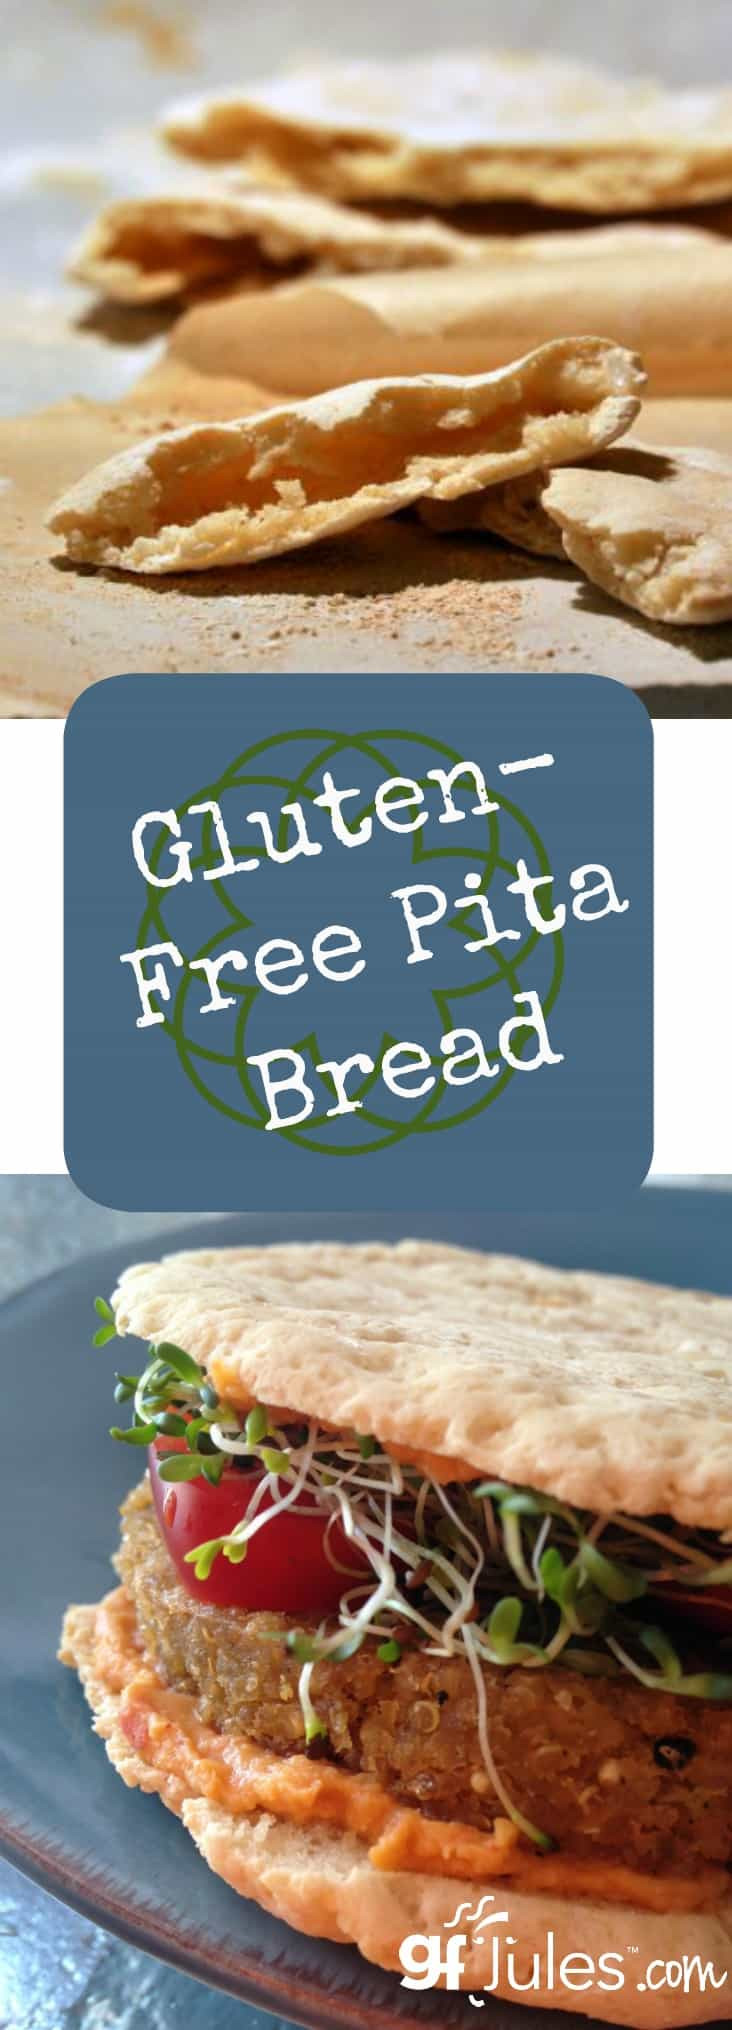 Gluten Free Pita Bread
 Gluten Free Pita or Naan Flatbreads make em authentic w